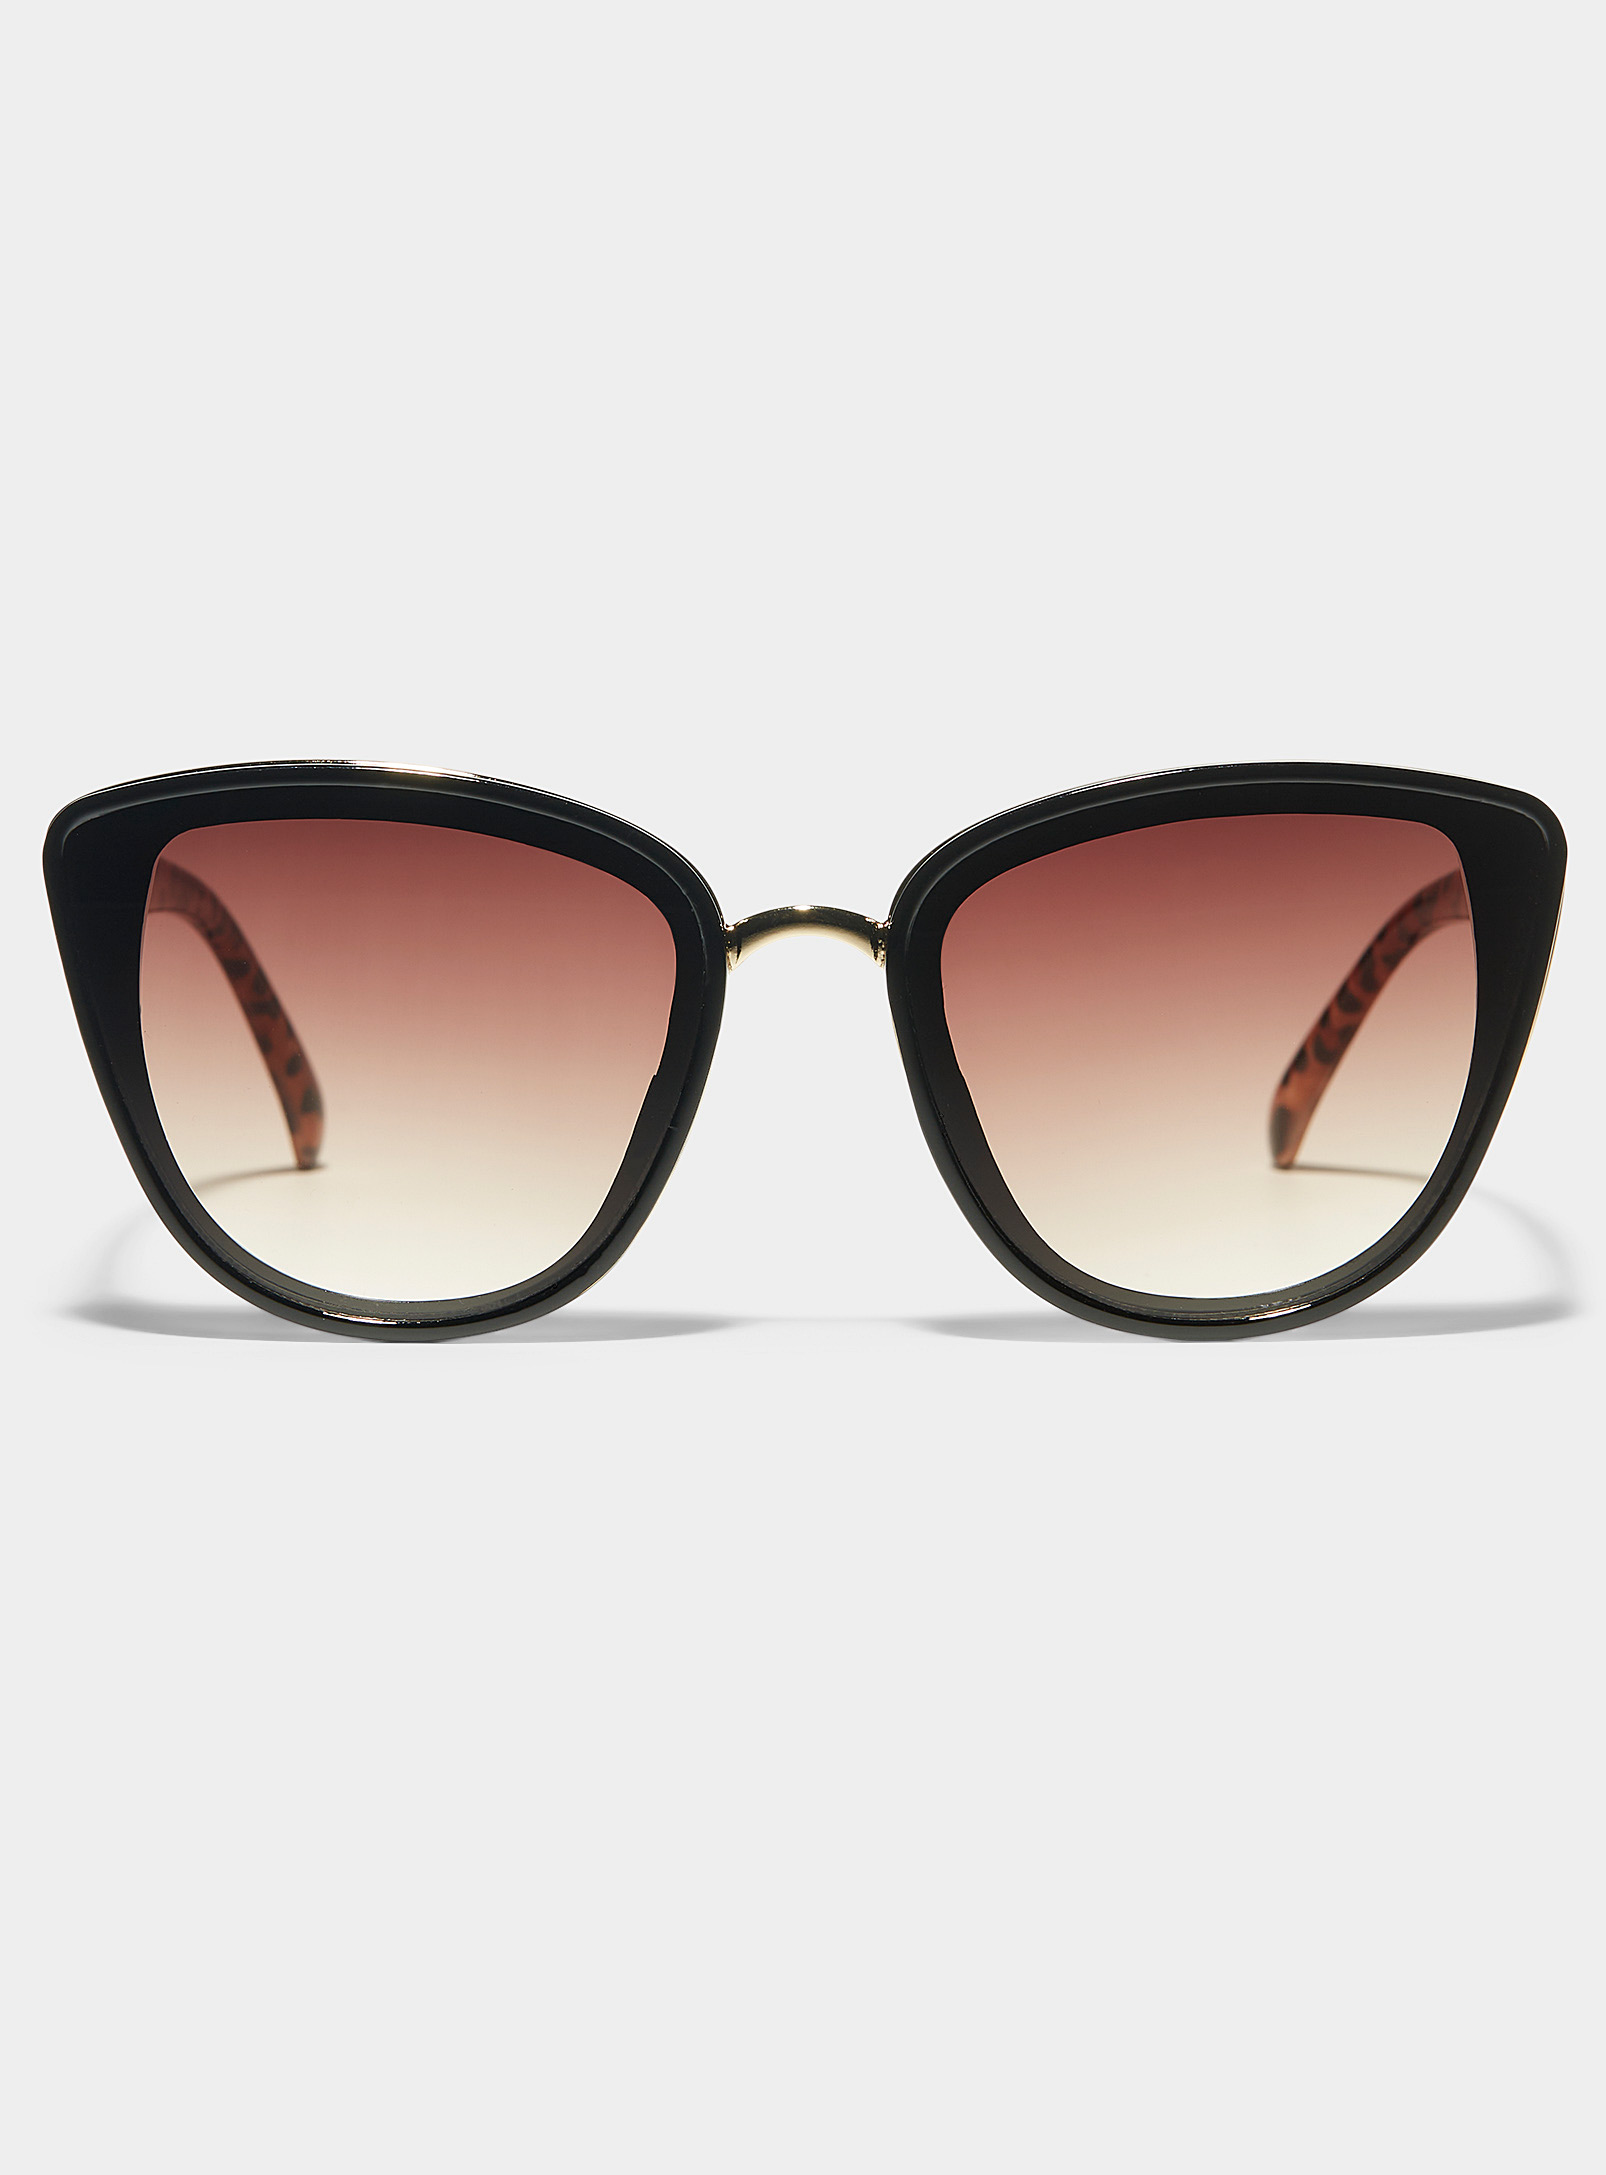 Simons - Women's Metallic accent cat-eye sunglasses